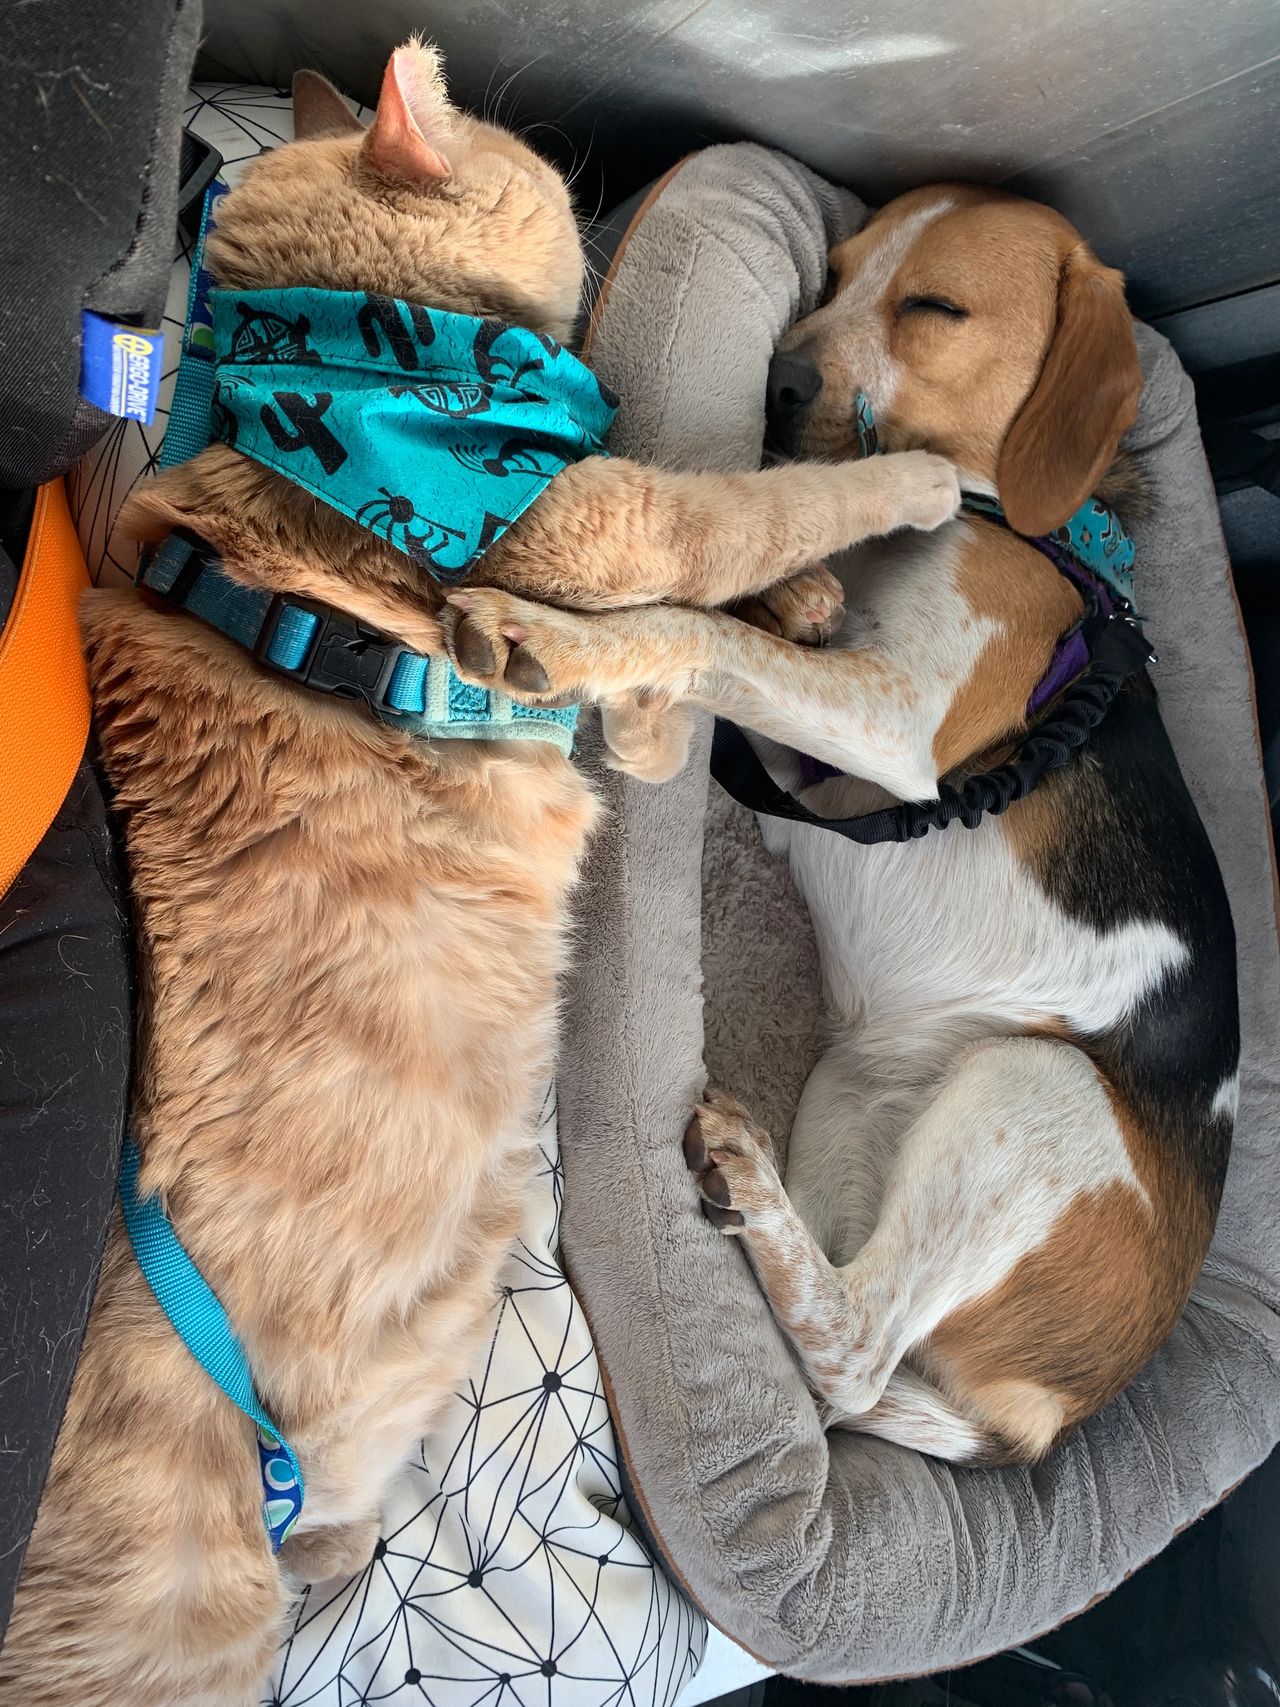 Chelsea's dog and cat cuddling in her van.